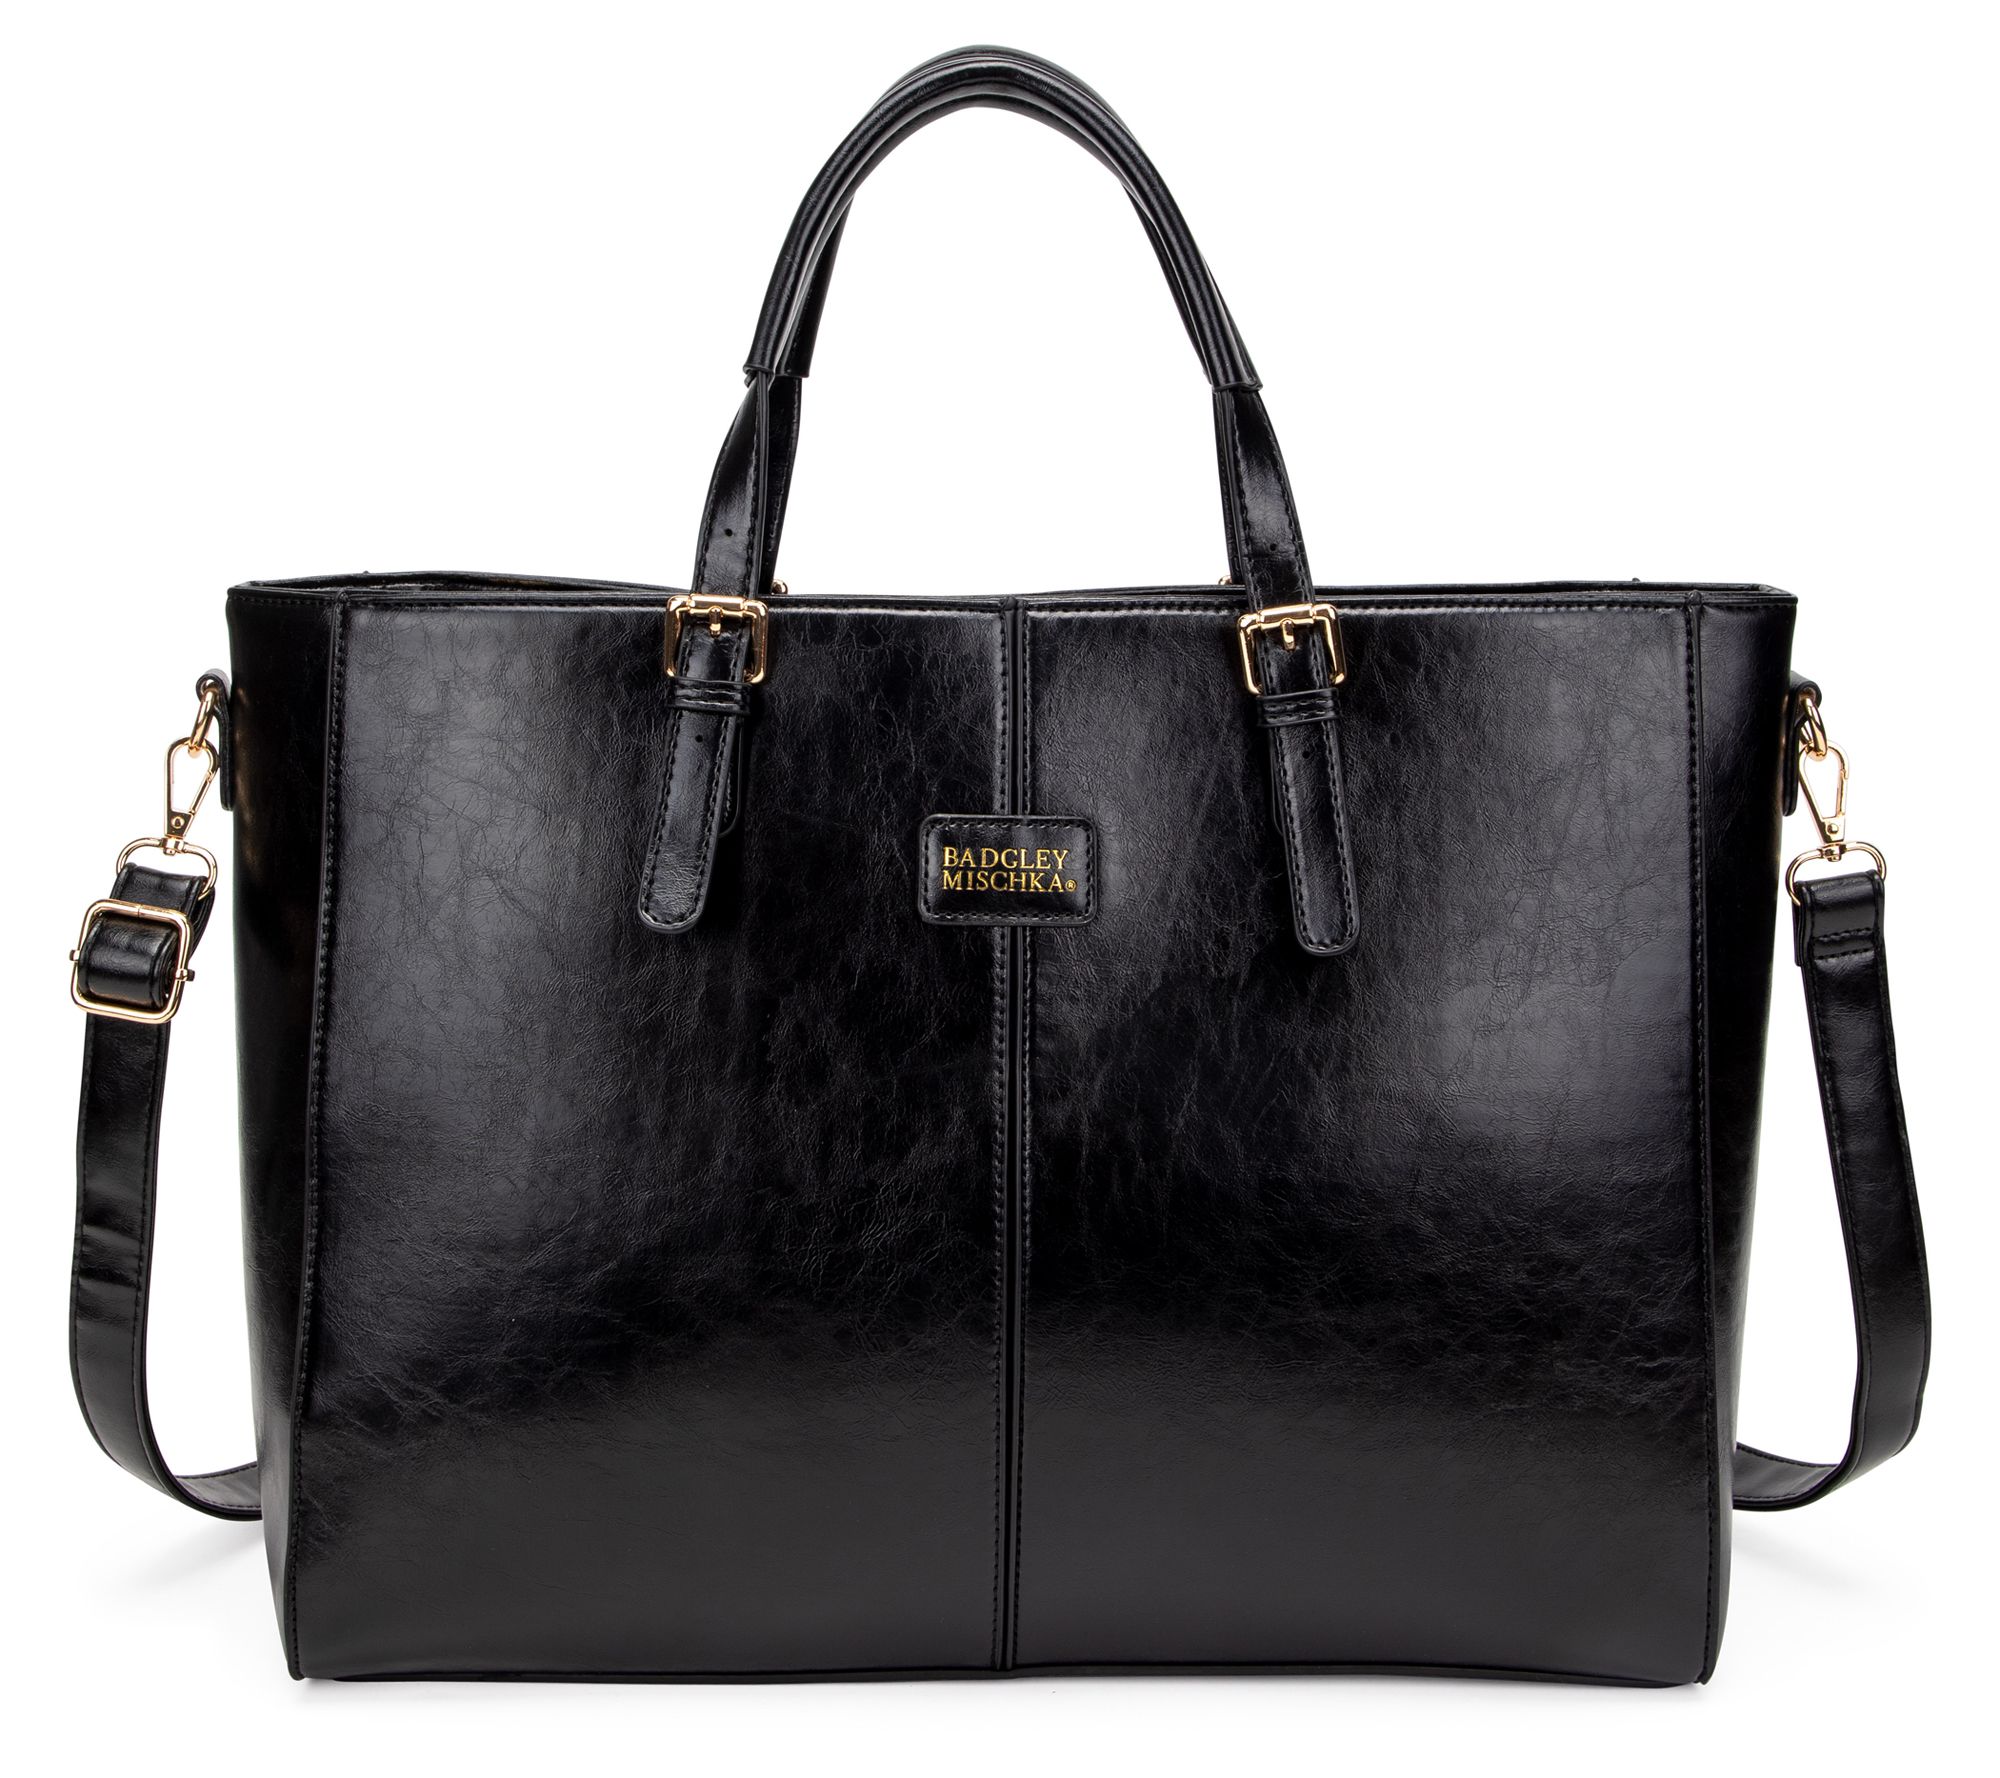 Badgley Mischka Diana XL Faux Leather Tote Weekender Travel Bag, Black